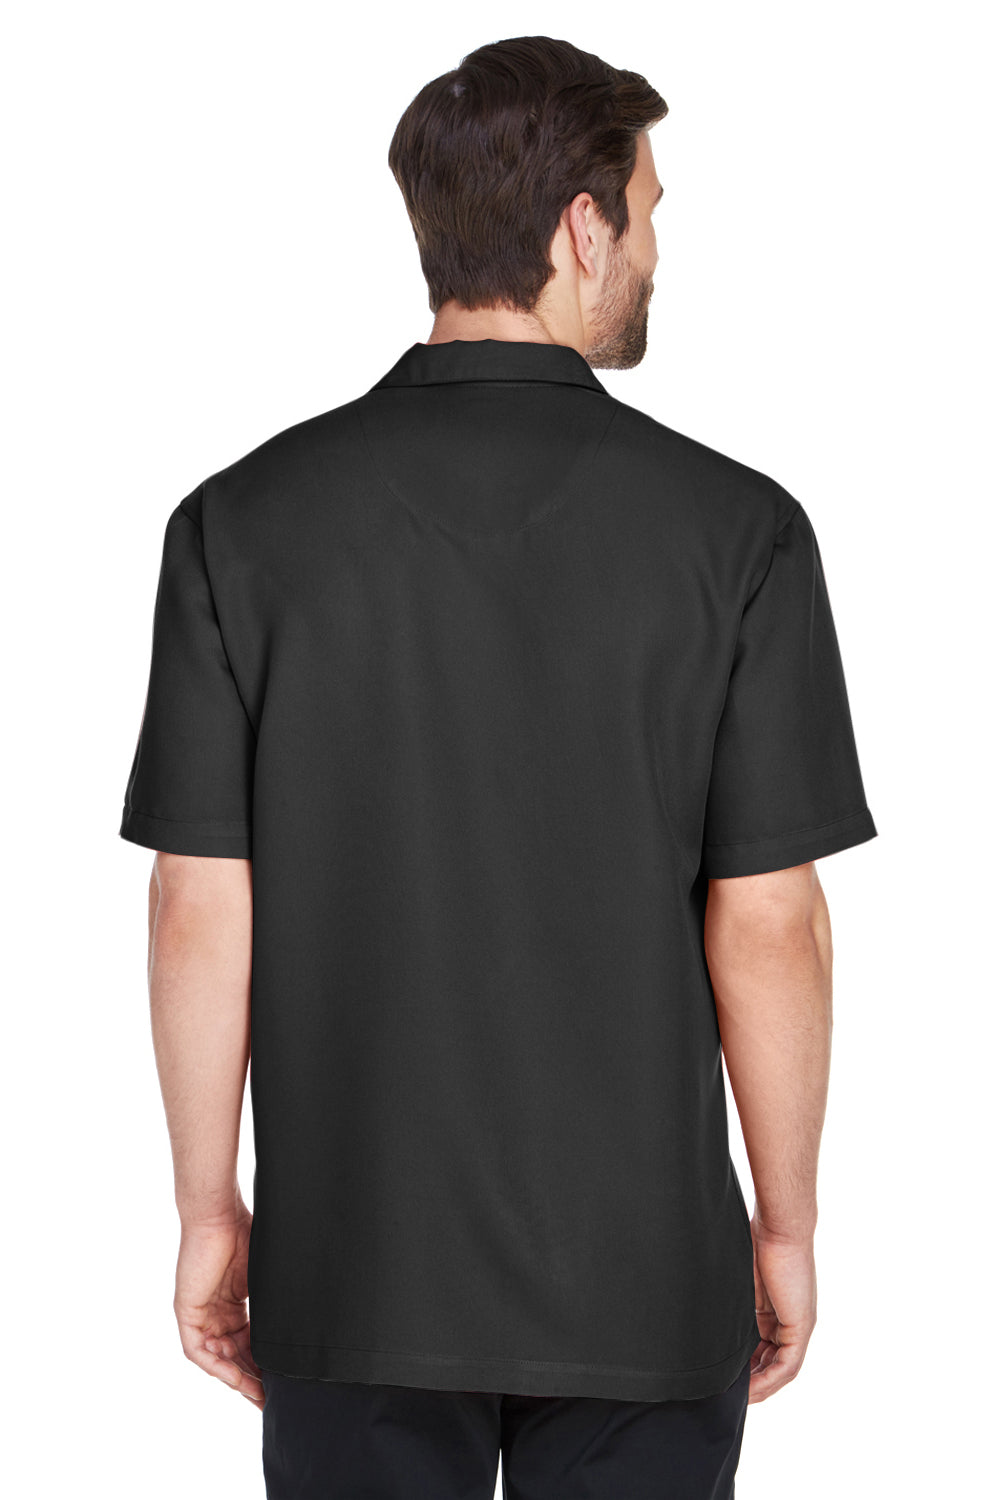 UltraClub 8980 Mens Cabana Breeze Short Sleeve Button Down Camp Shirt w/ Pocket Black Back